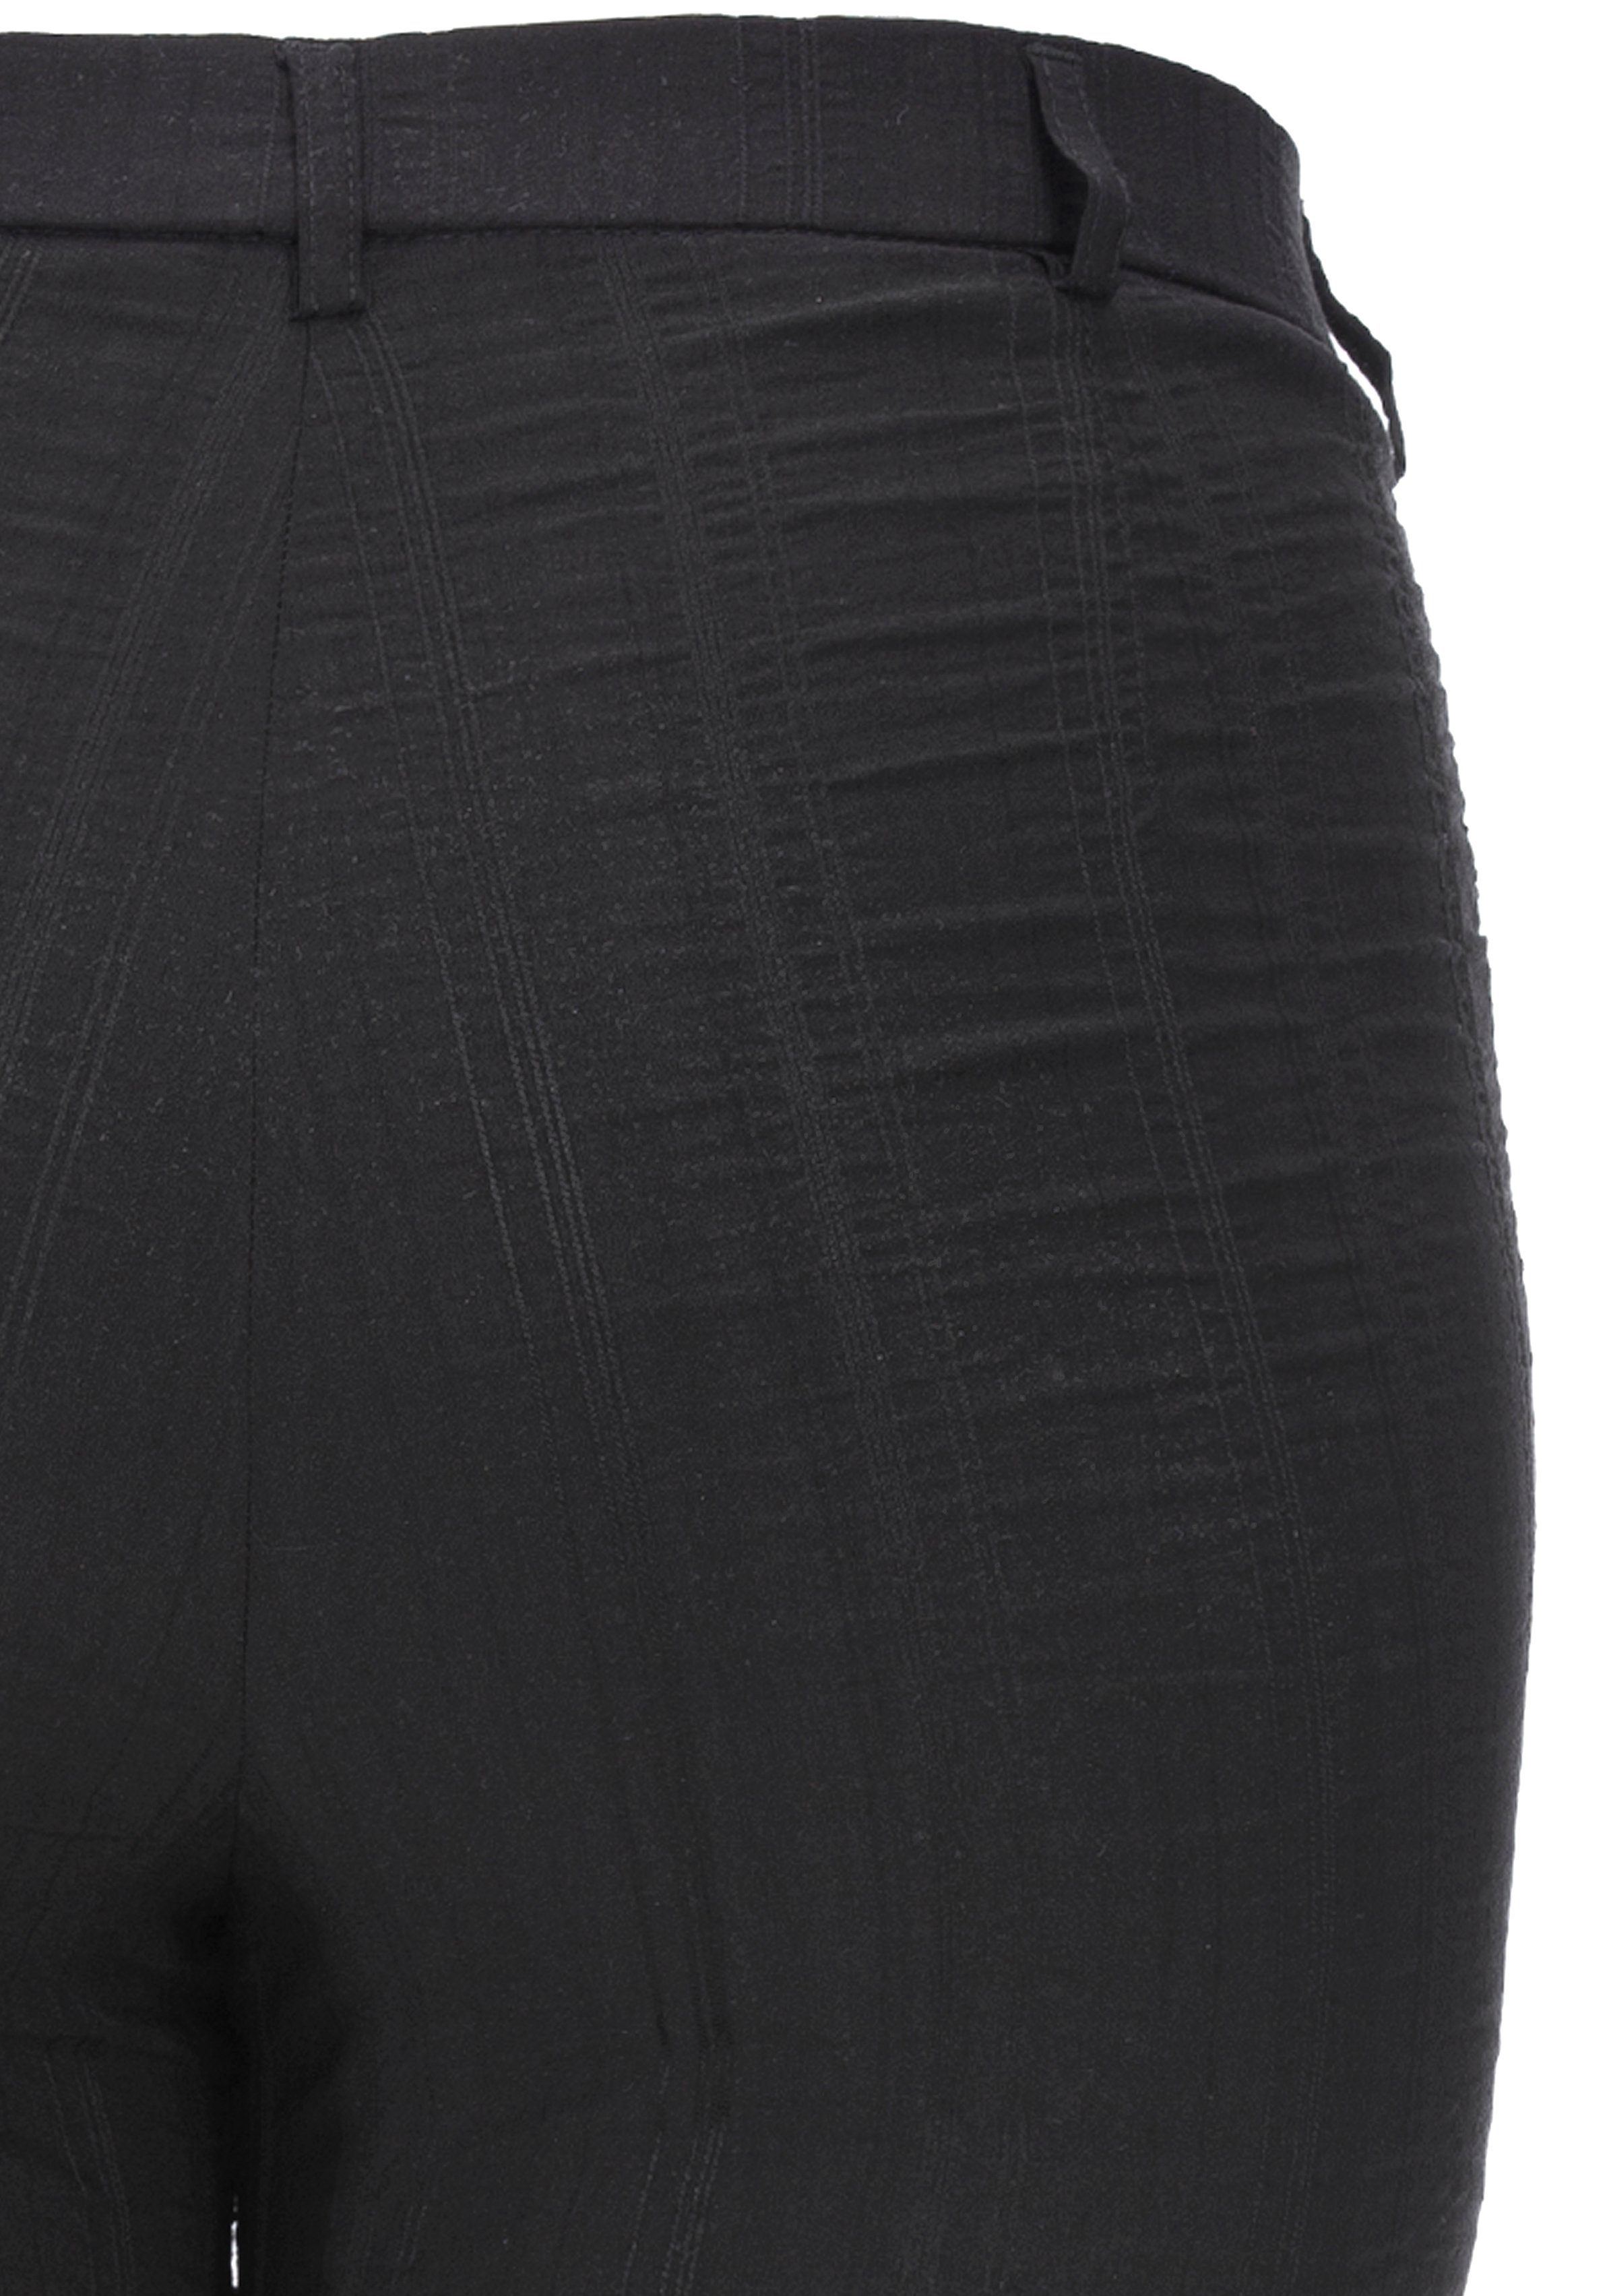 Bea Passform schwarz gestreift Stoffhose optimale Quer-Stretch KjBRAND in